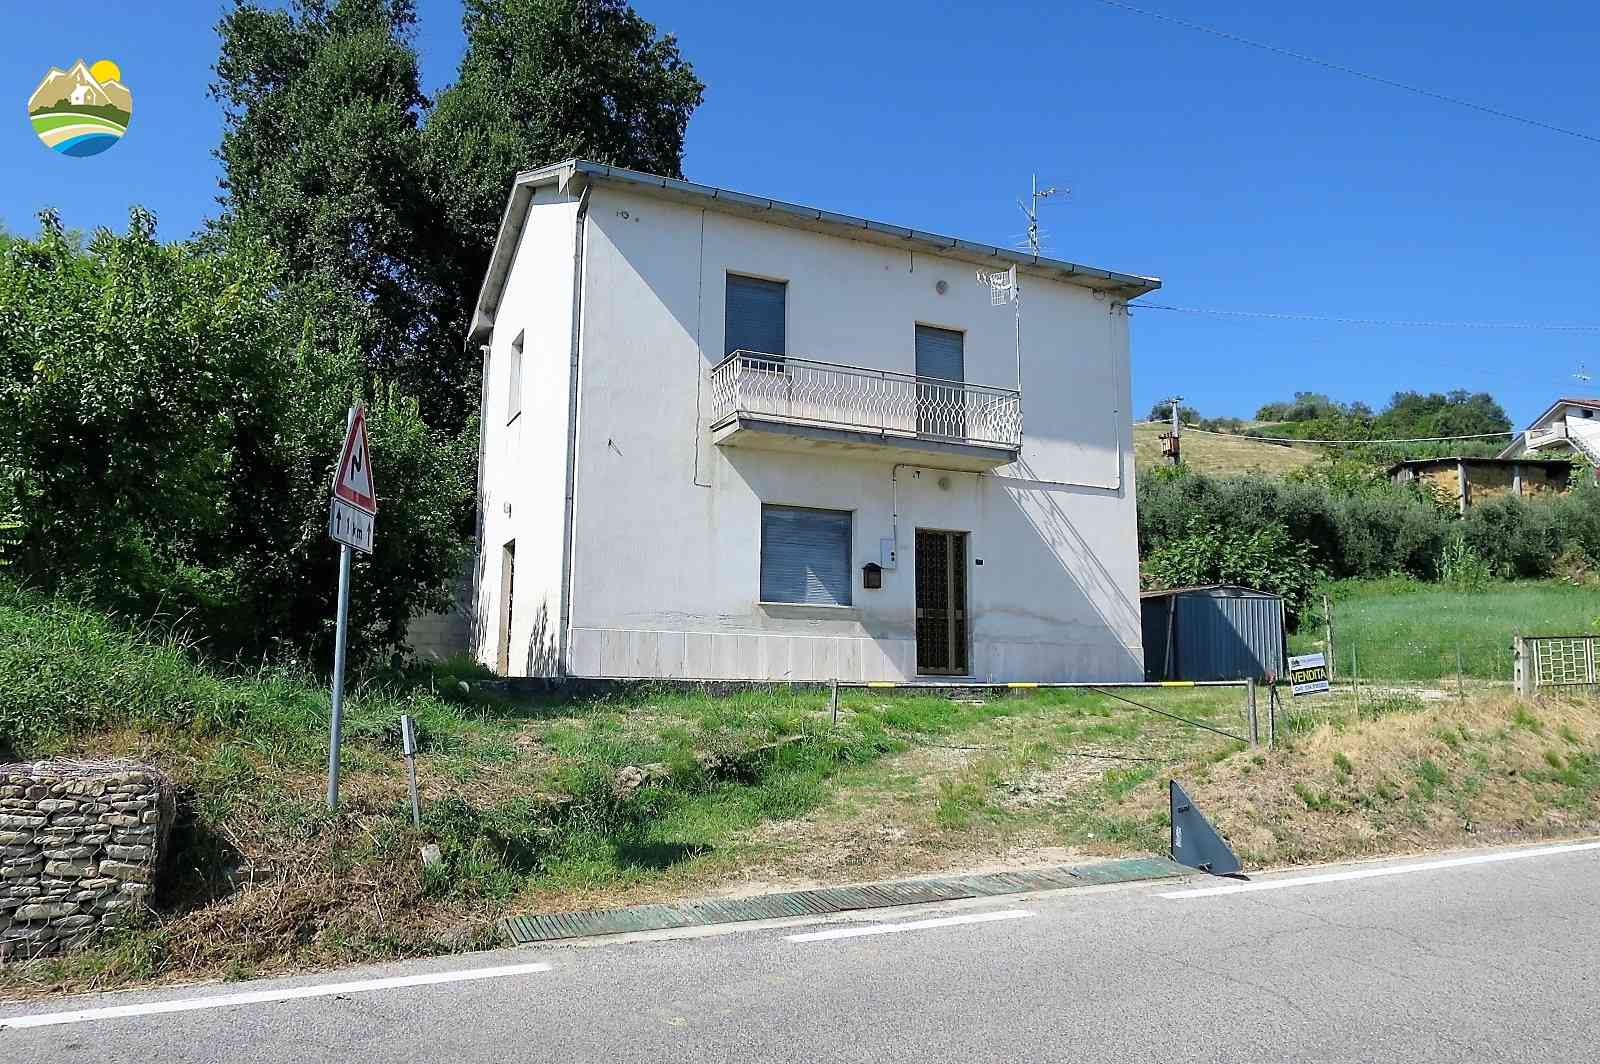 Country Houses Country Houses for sale Cellino Attanasio (TE), Casa 81 - Cellino Attanasio - EUR 80.394 10